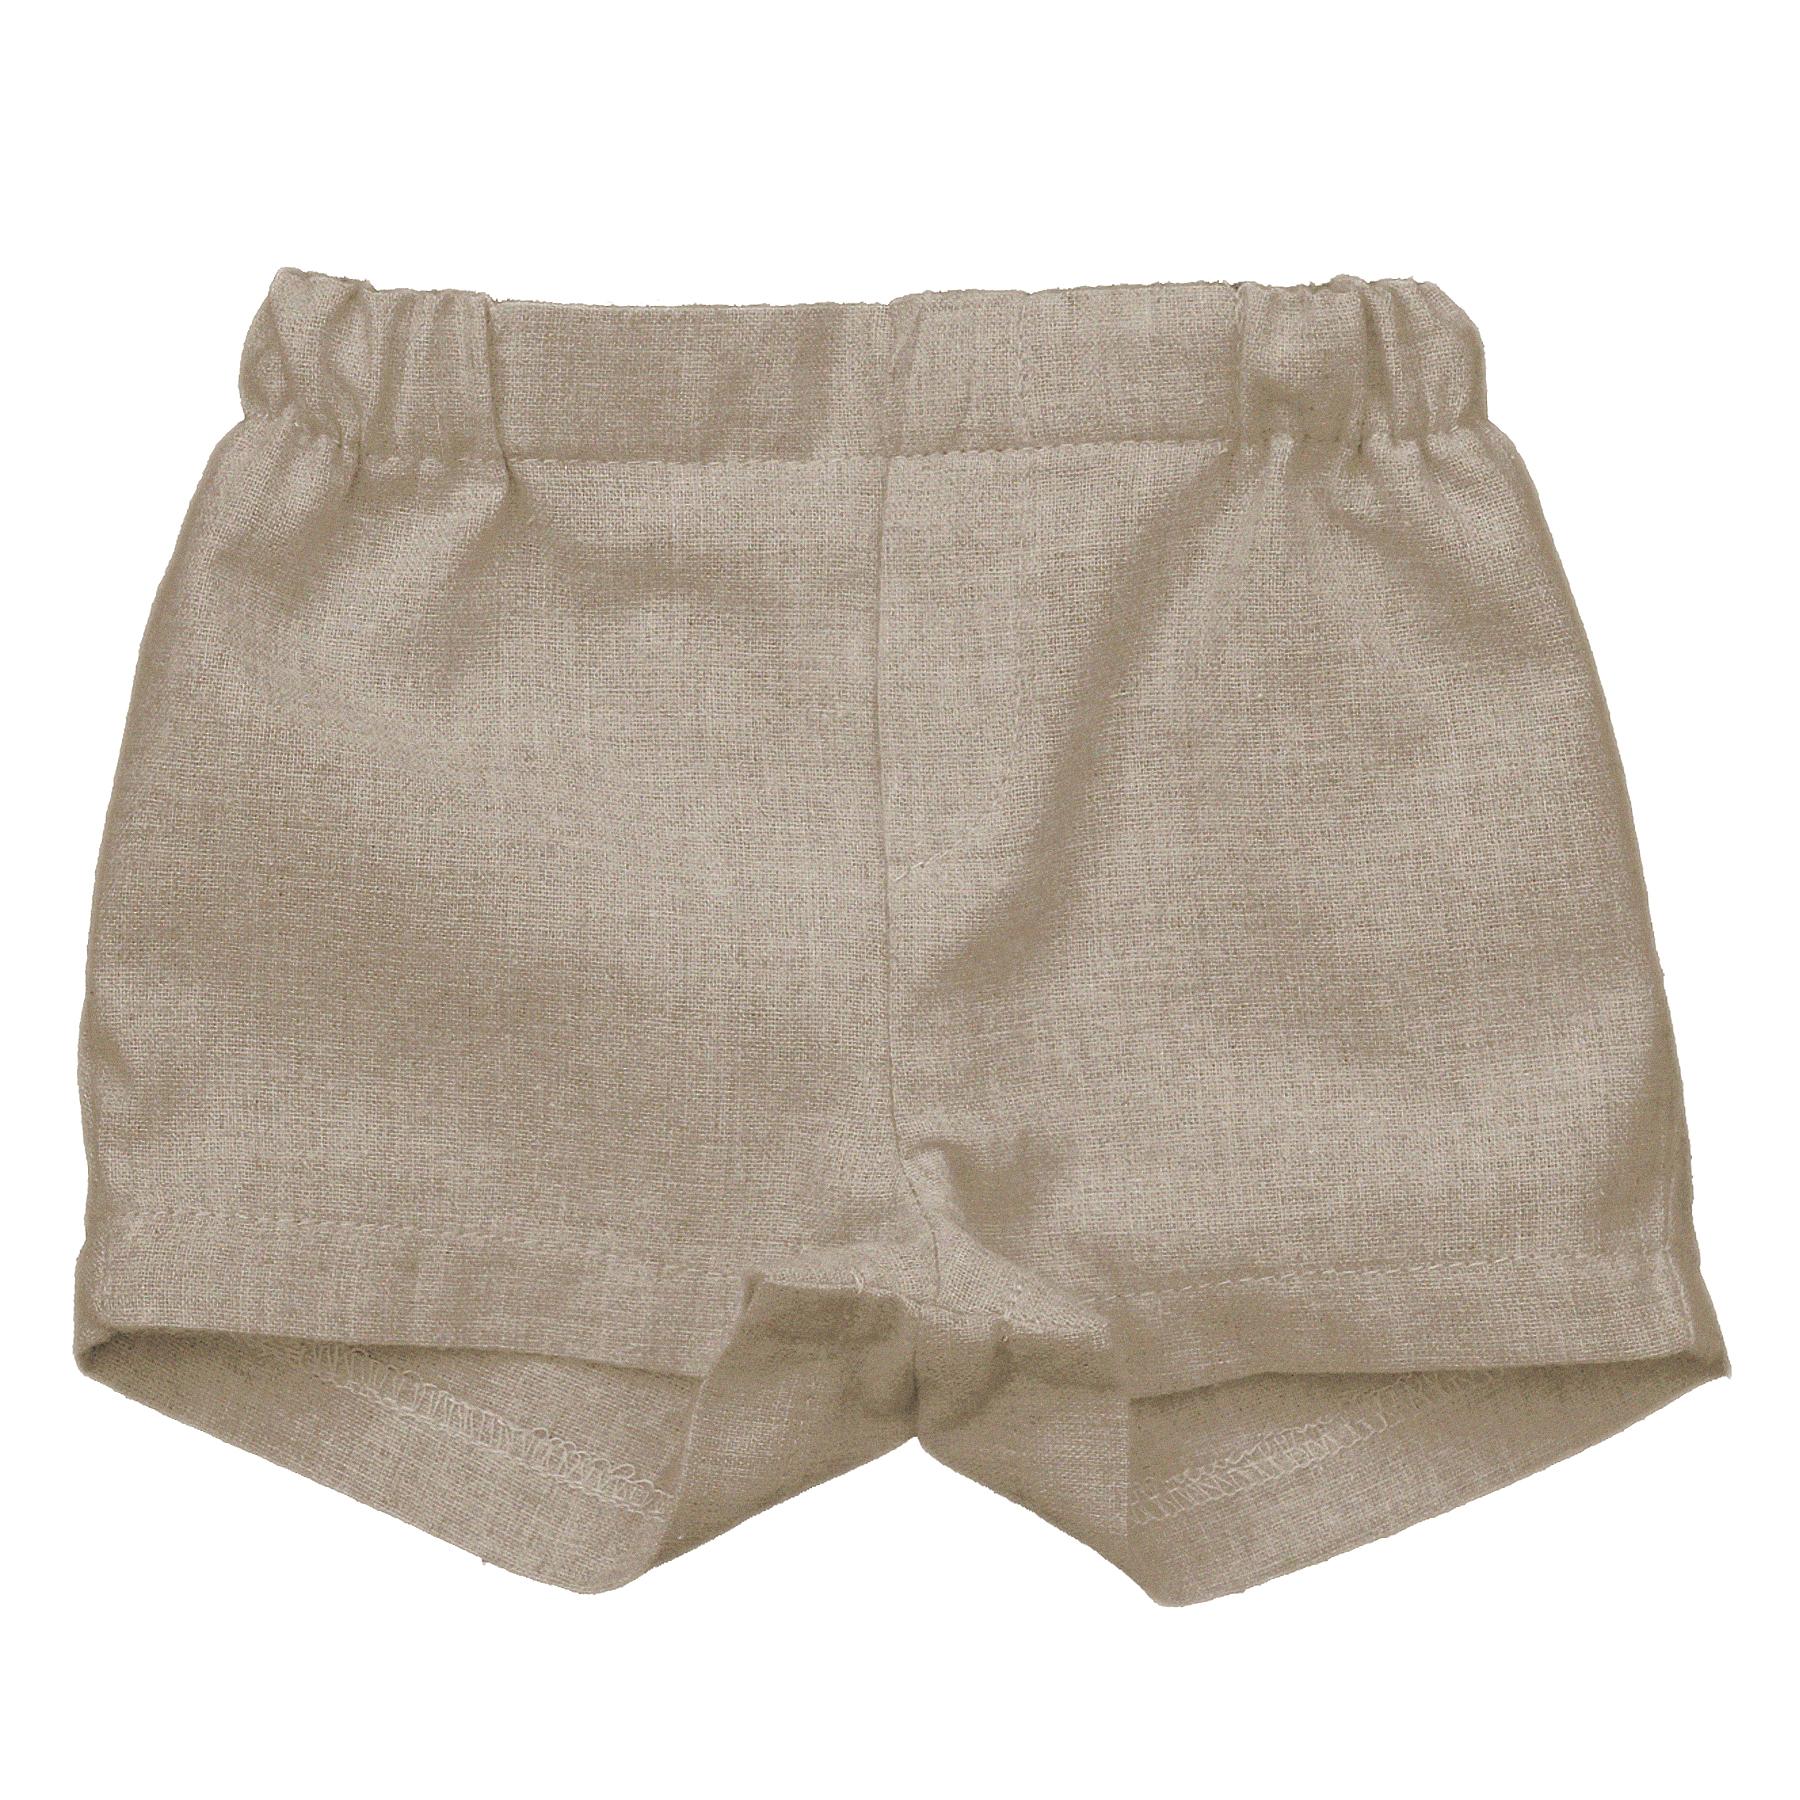 Alber sand colour canvas shorts